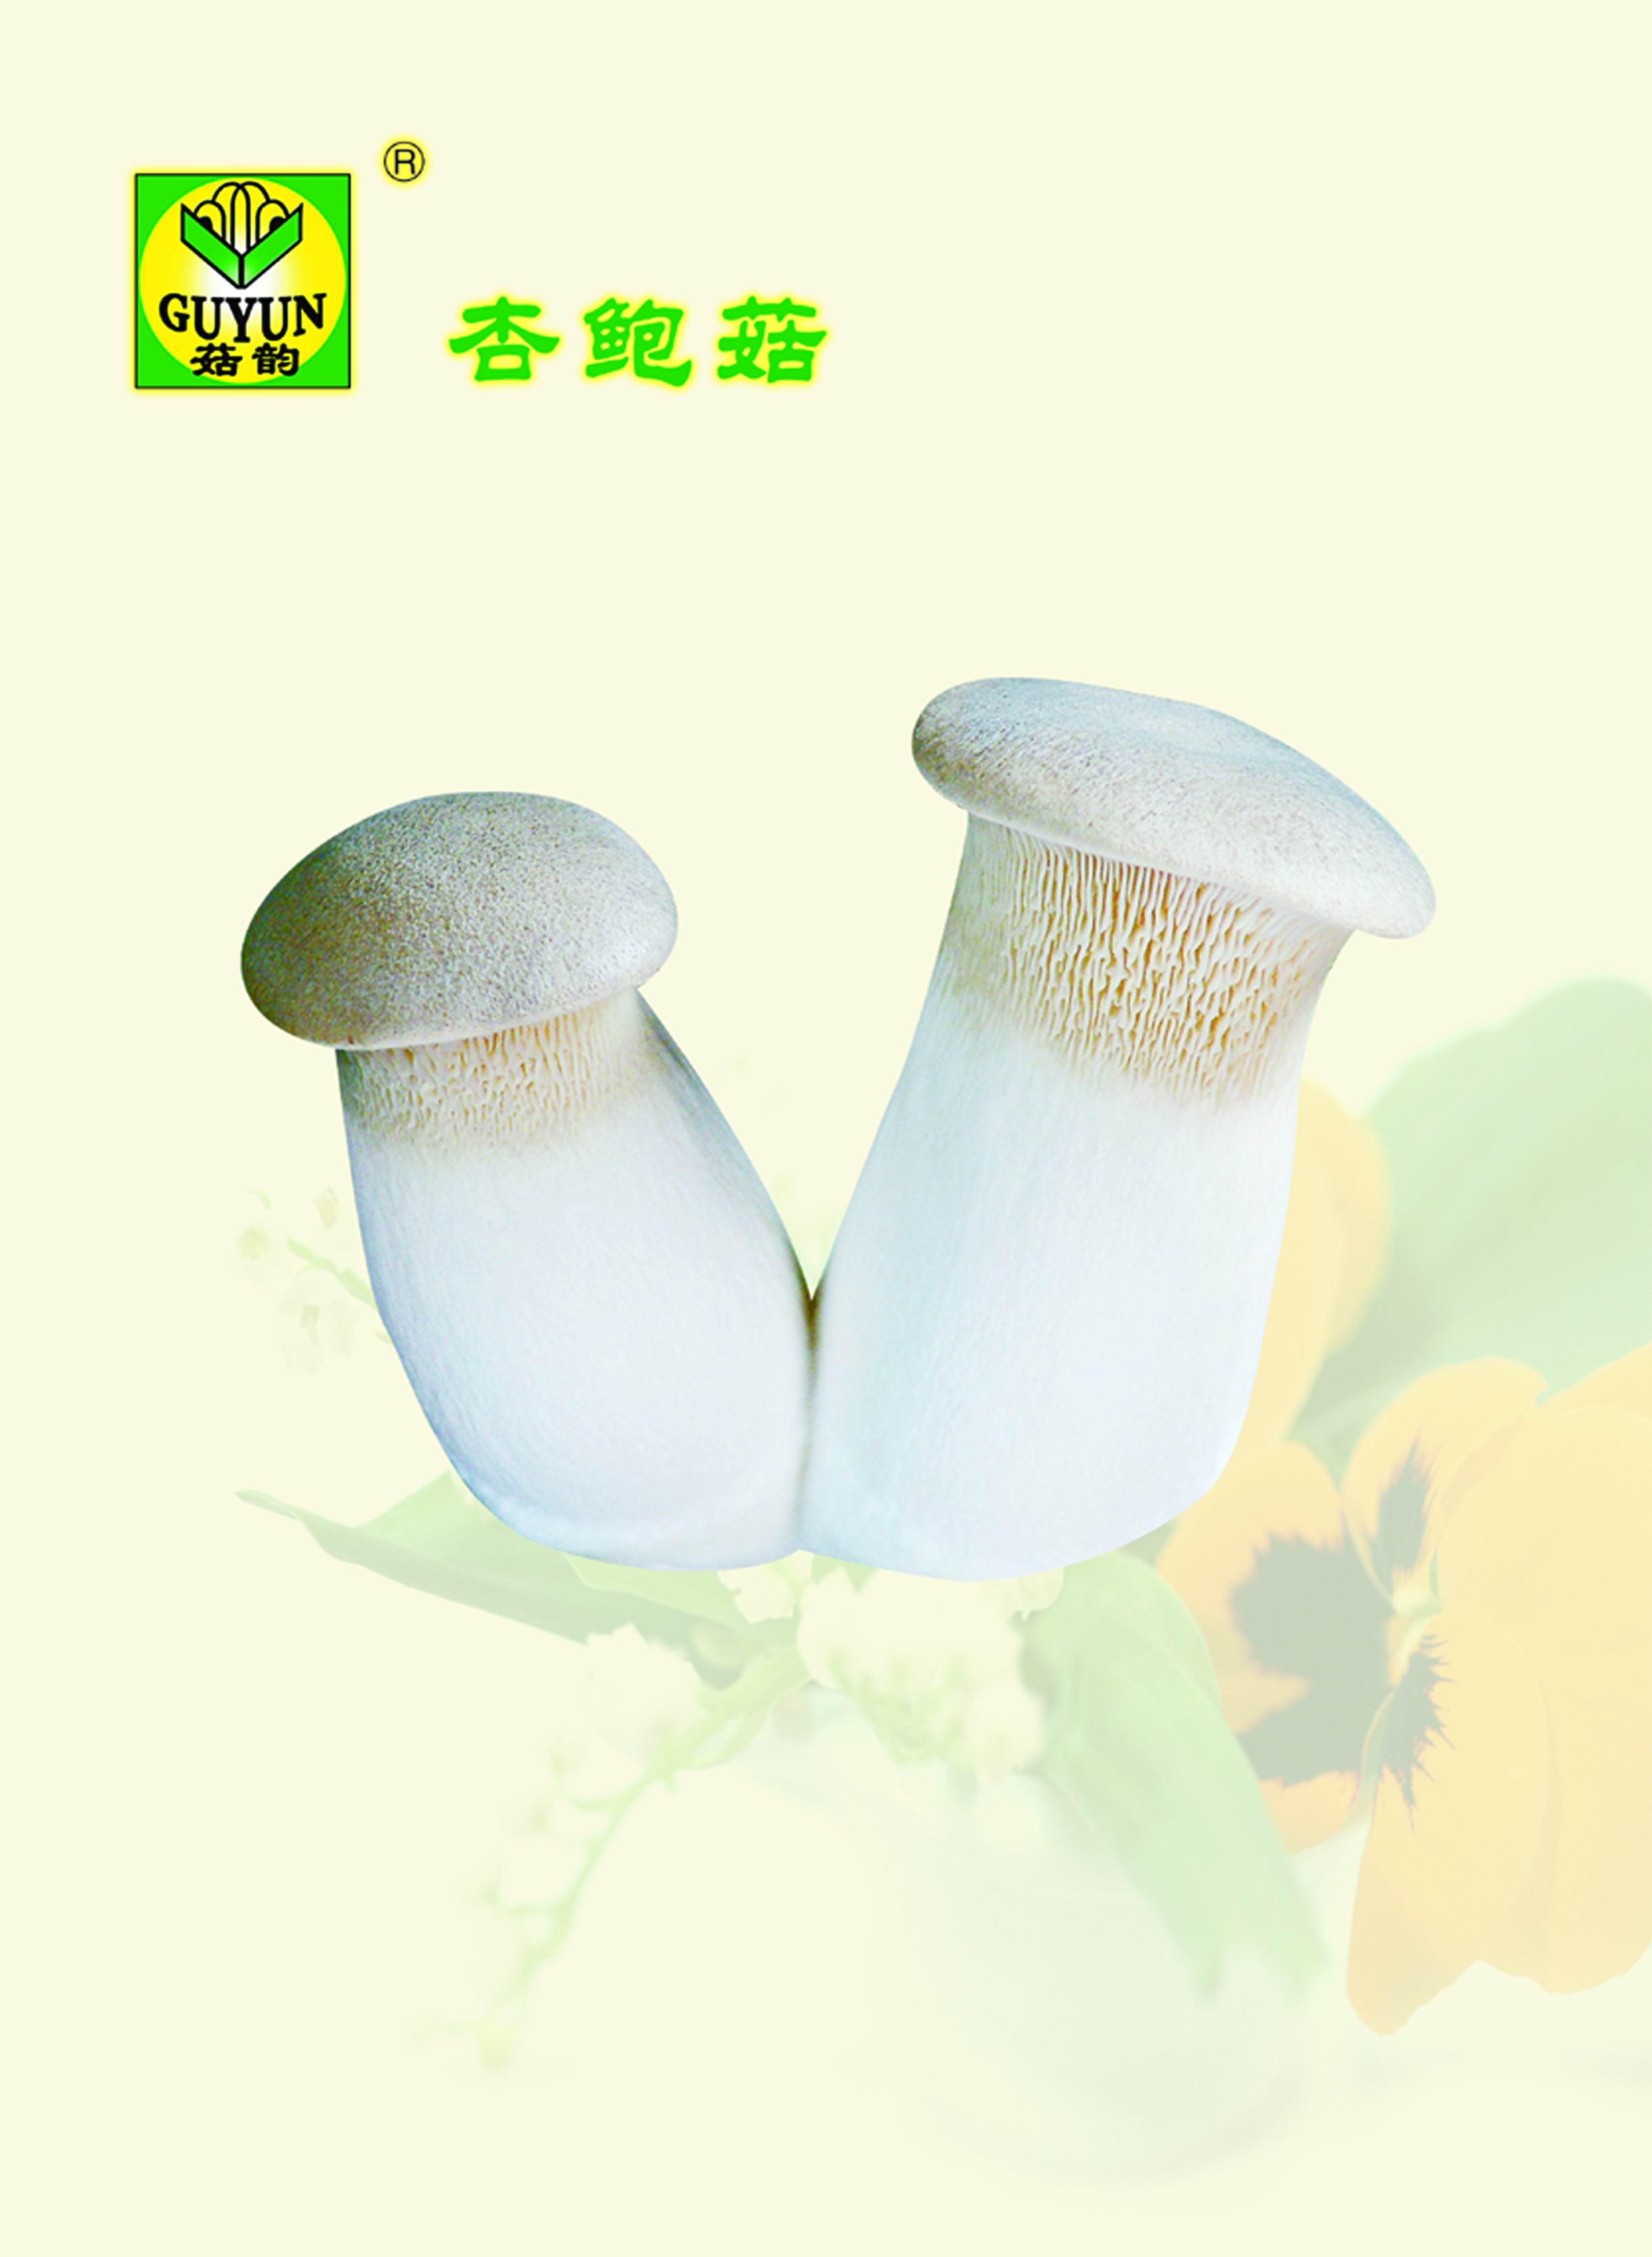 Olyster mushroom